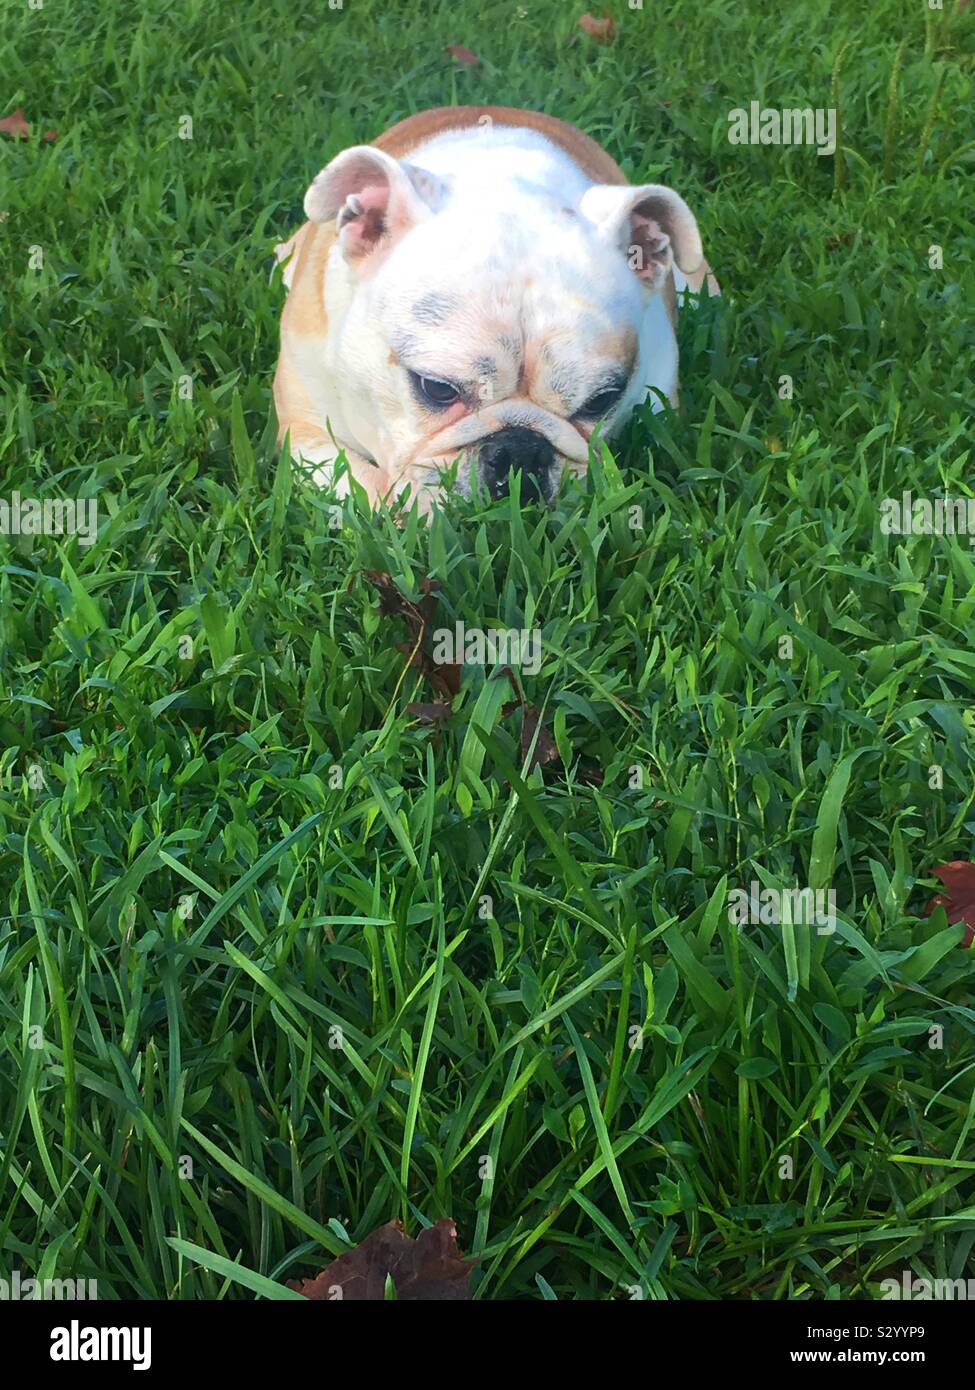 Bulldog in the grass Stock Photo